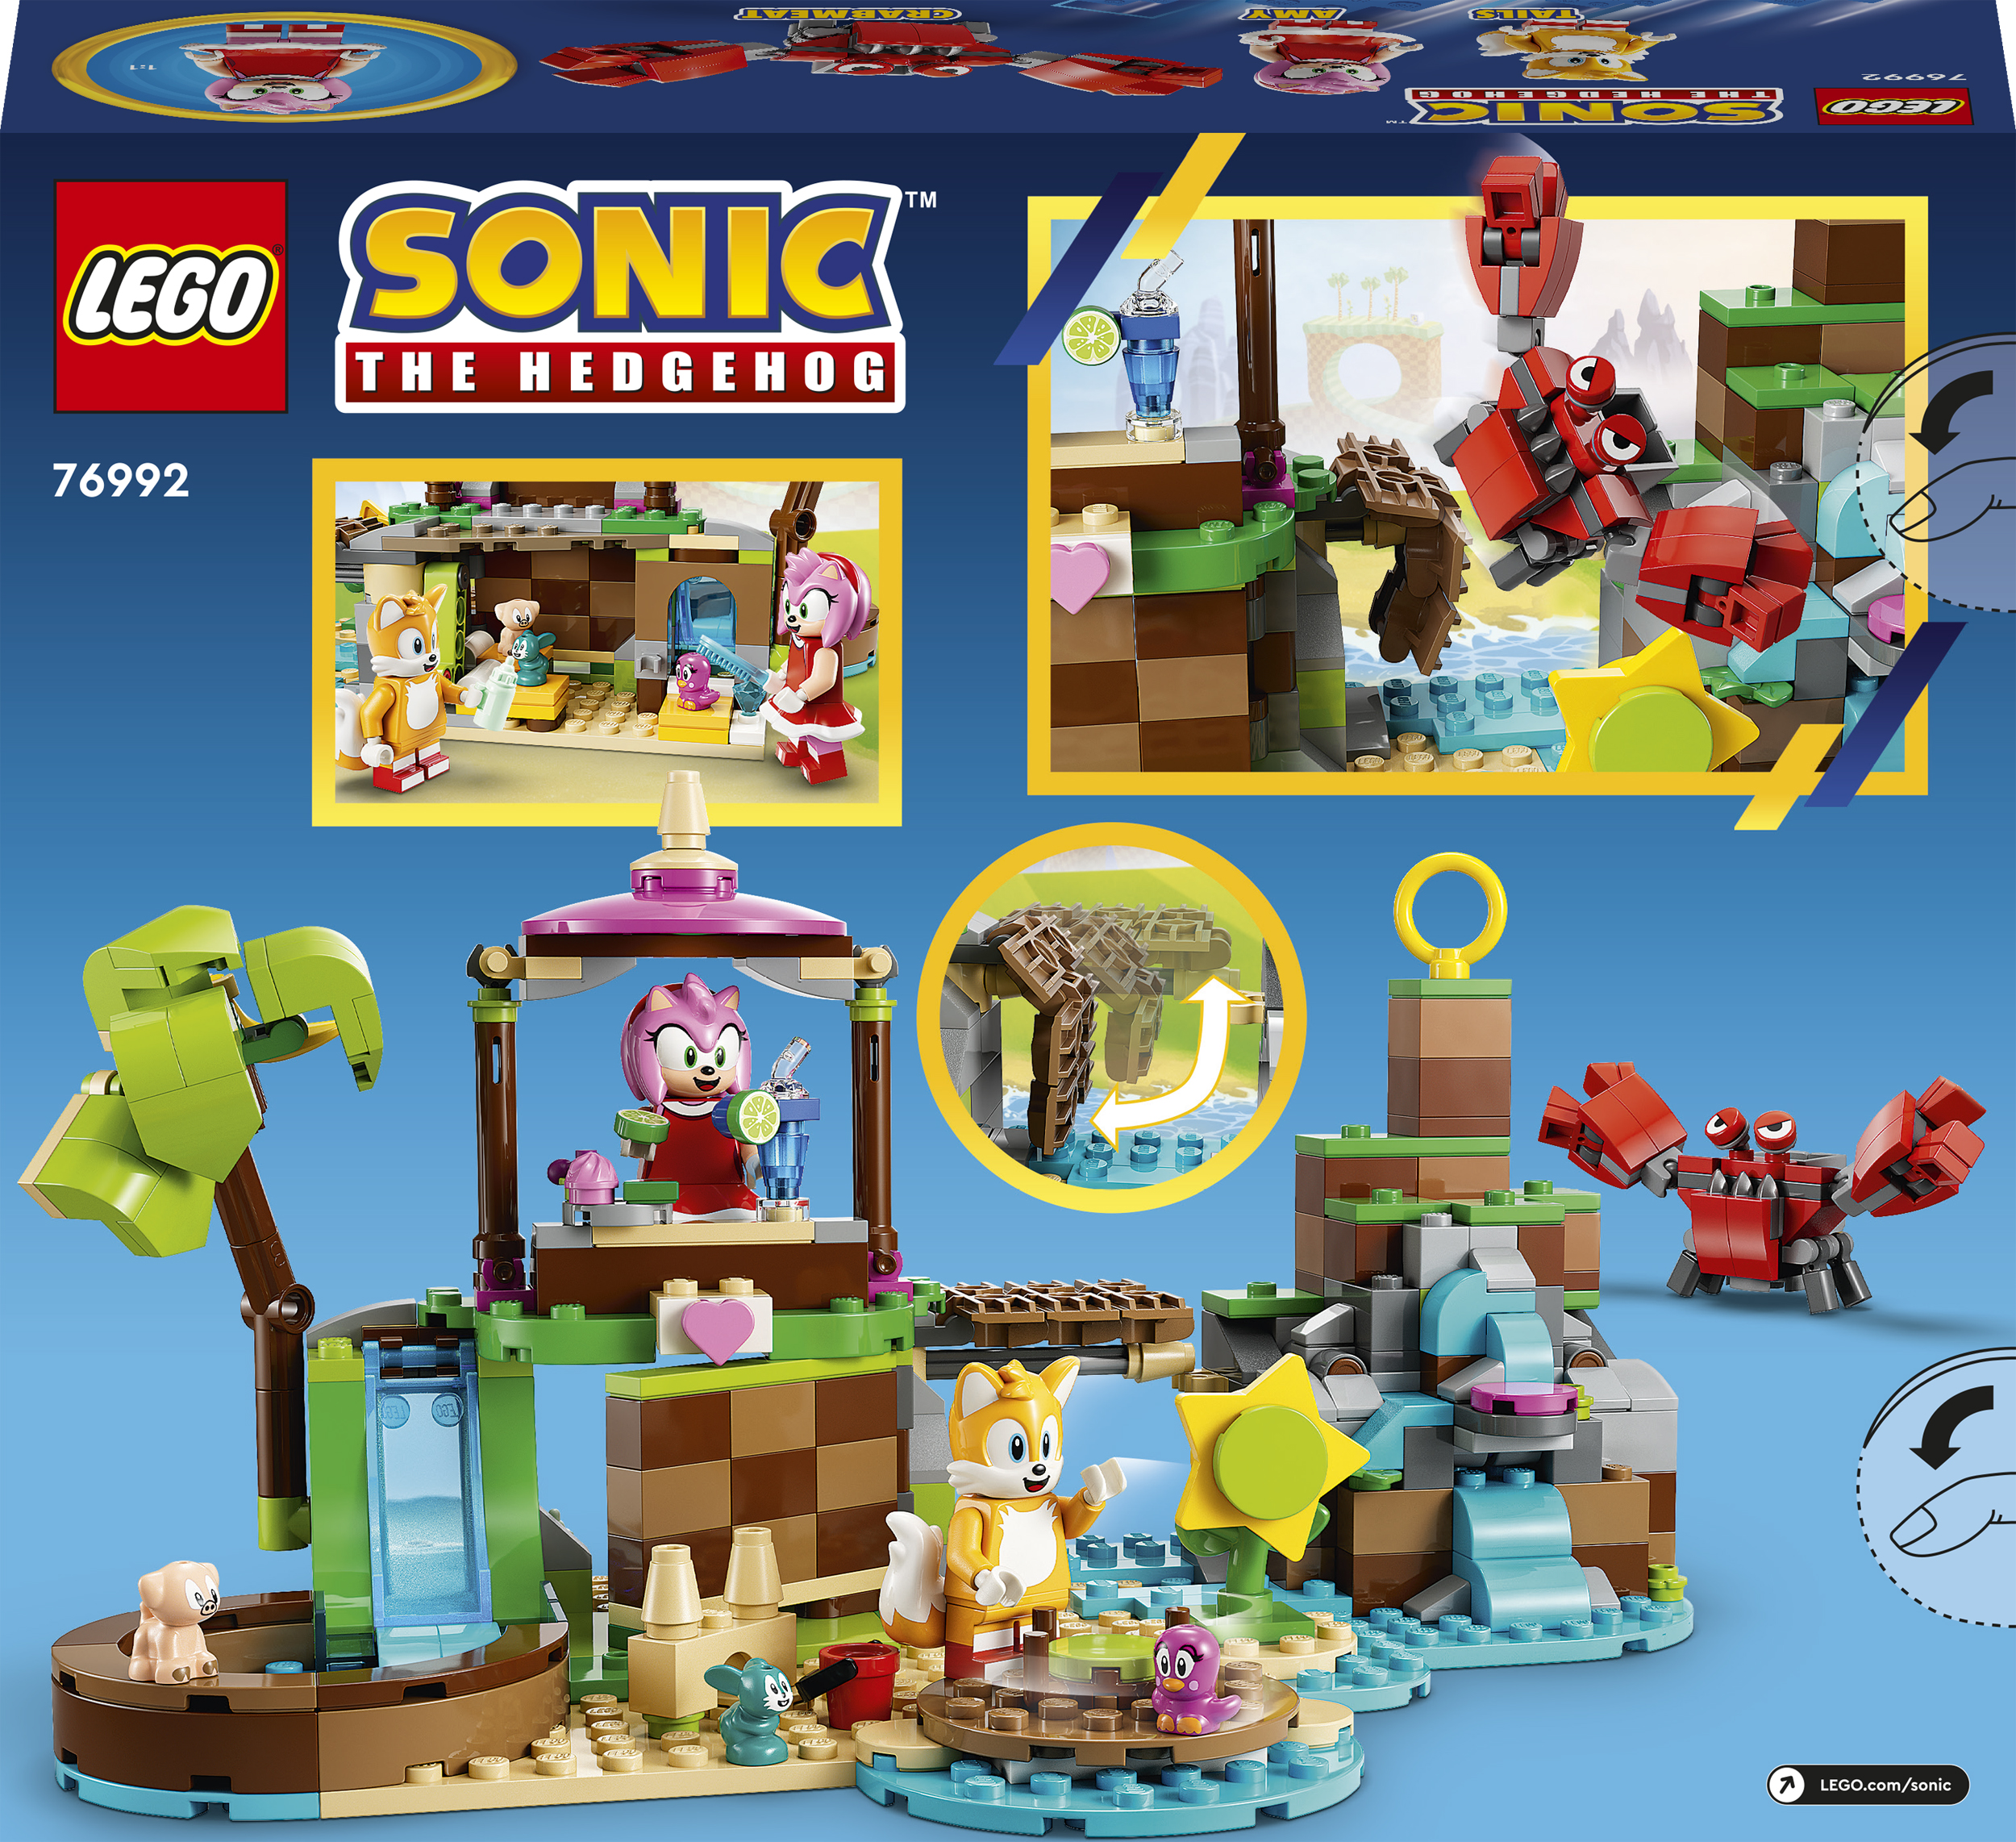 LEGO Sonic 2023 Theme Info! 